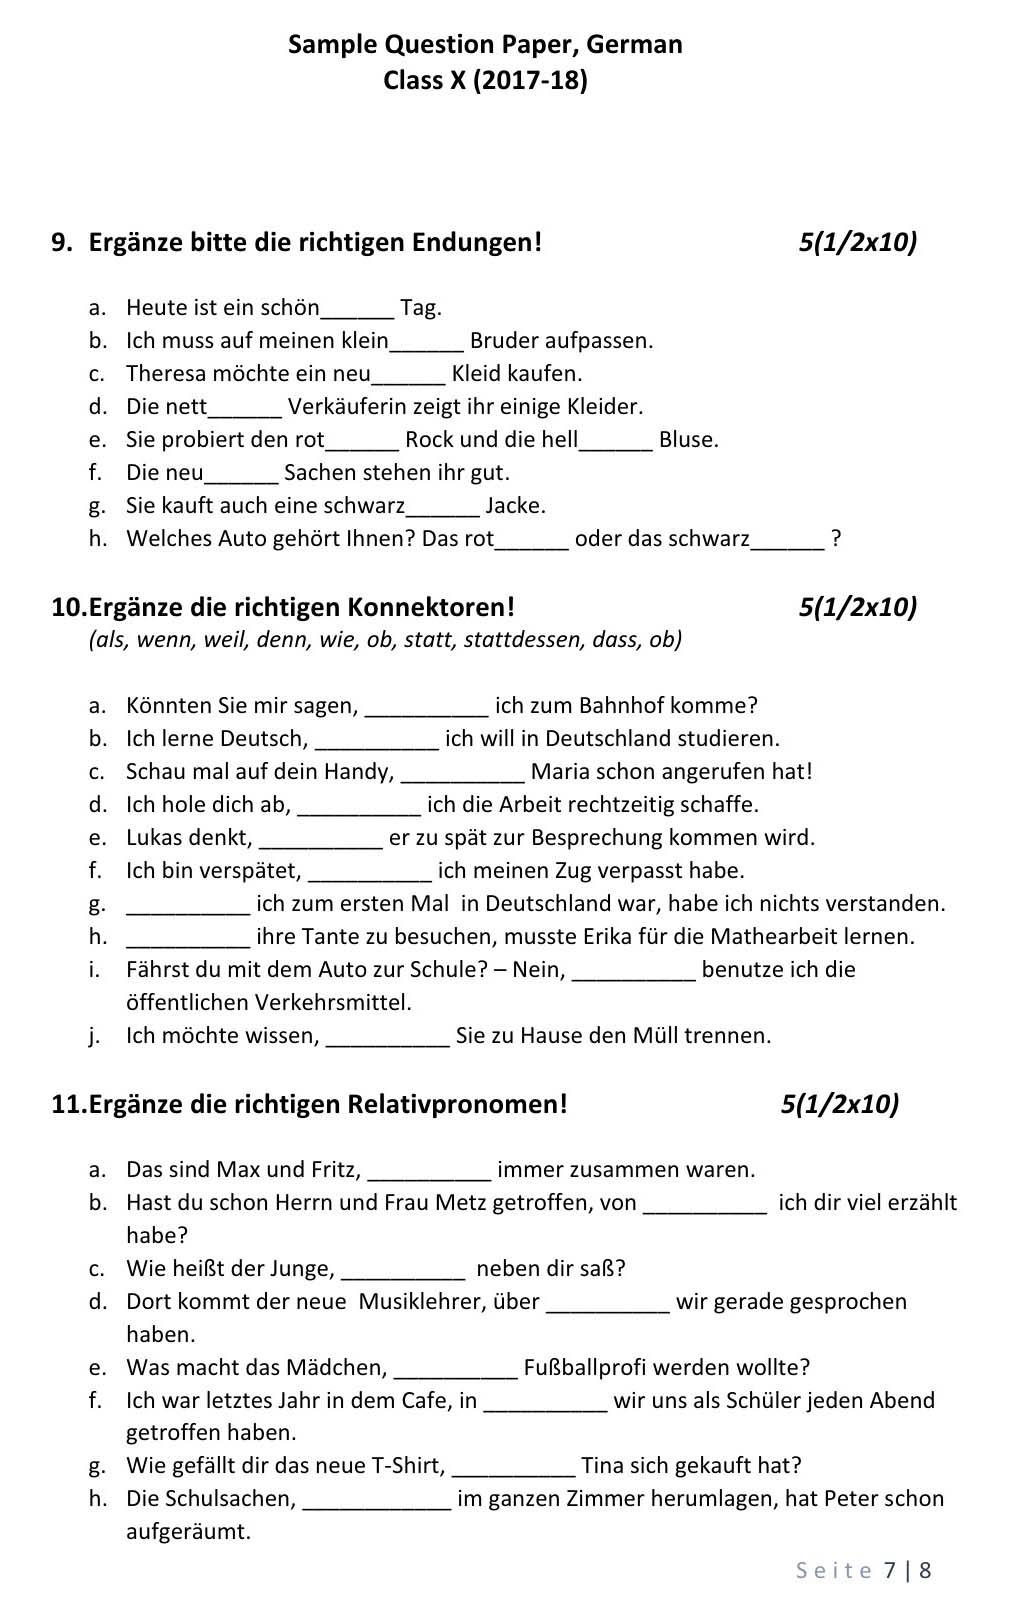 German CBSE Class X Sample Question Paper 2017 18 - Image 7